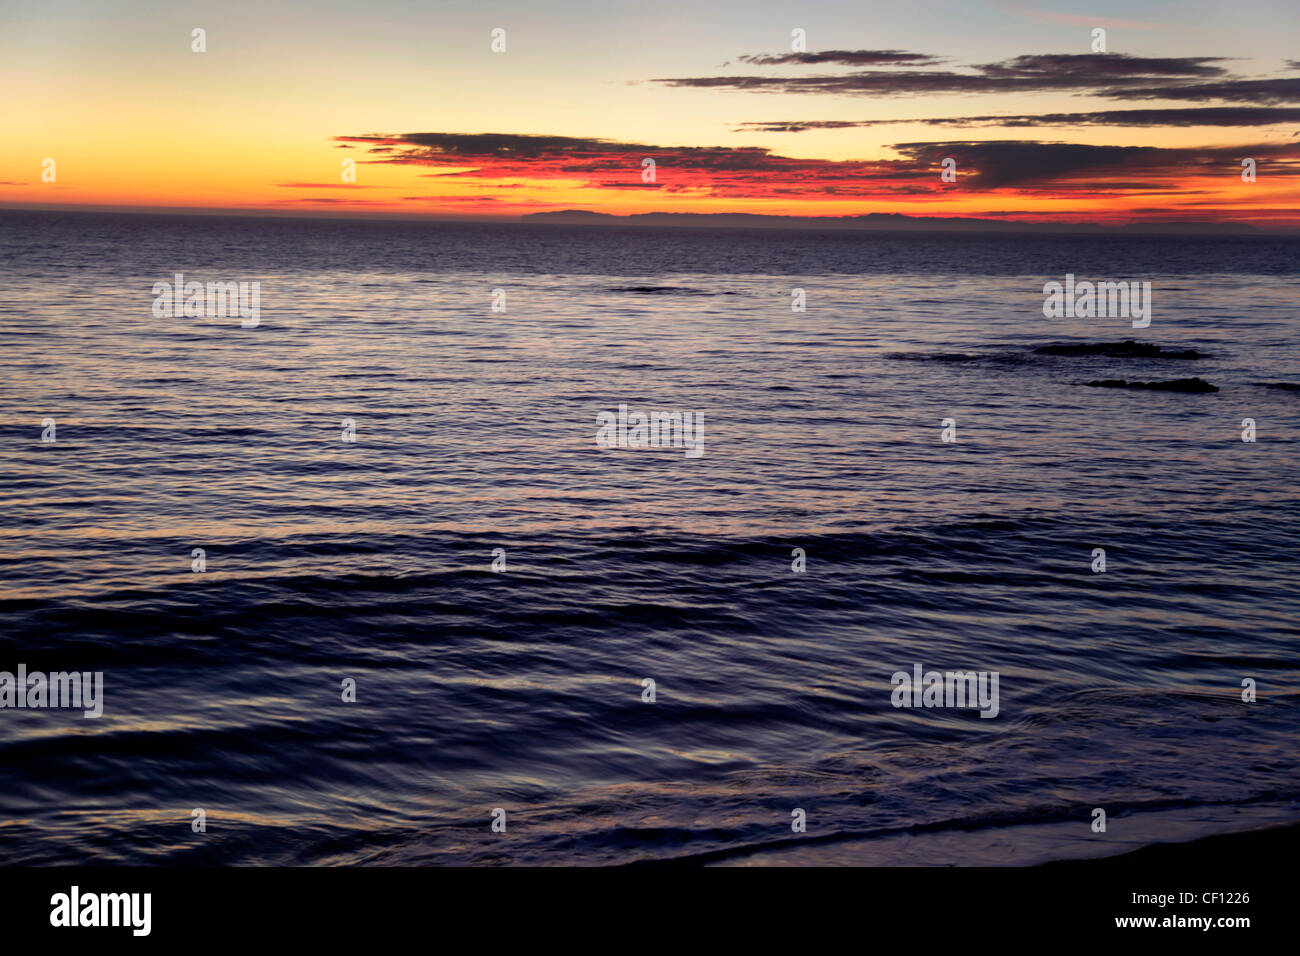 PACIFIC OCEAN SUNSET,CALIFORNIA, Stock Photo